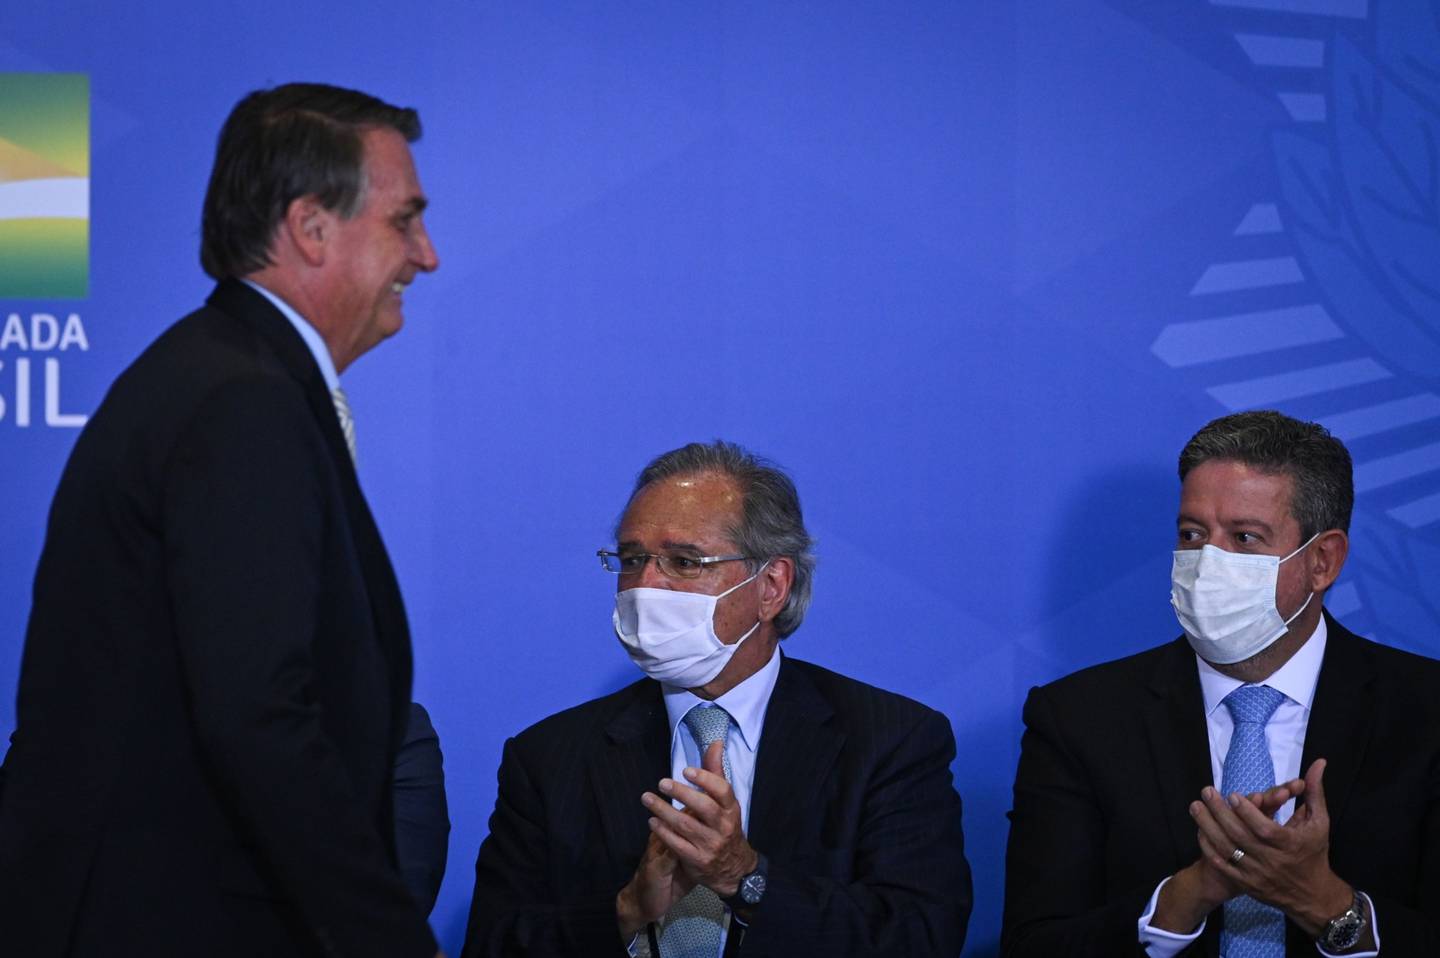 Jair Bolsonaro, presidente de Brasil, a la izquierda, camina junto a Paulo Guedes, ministro de Economía de Brasil, y Arthur Lira, presidente de la Cámara Baja de Brasil.